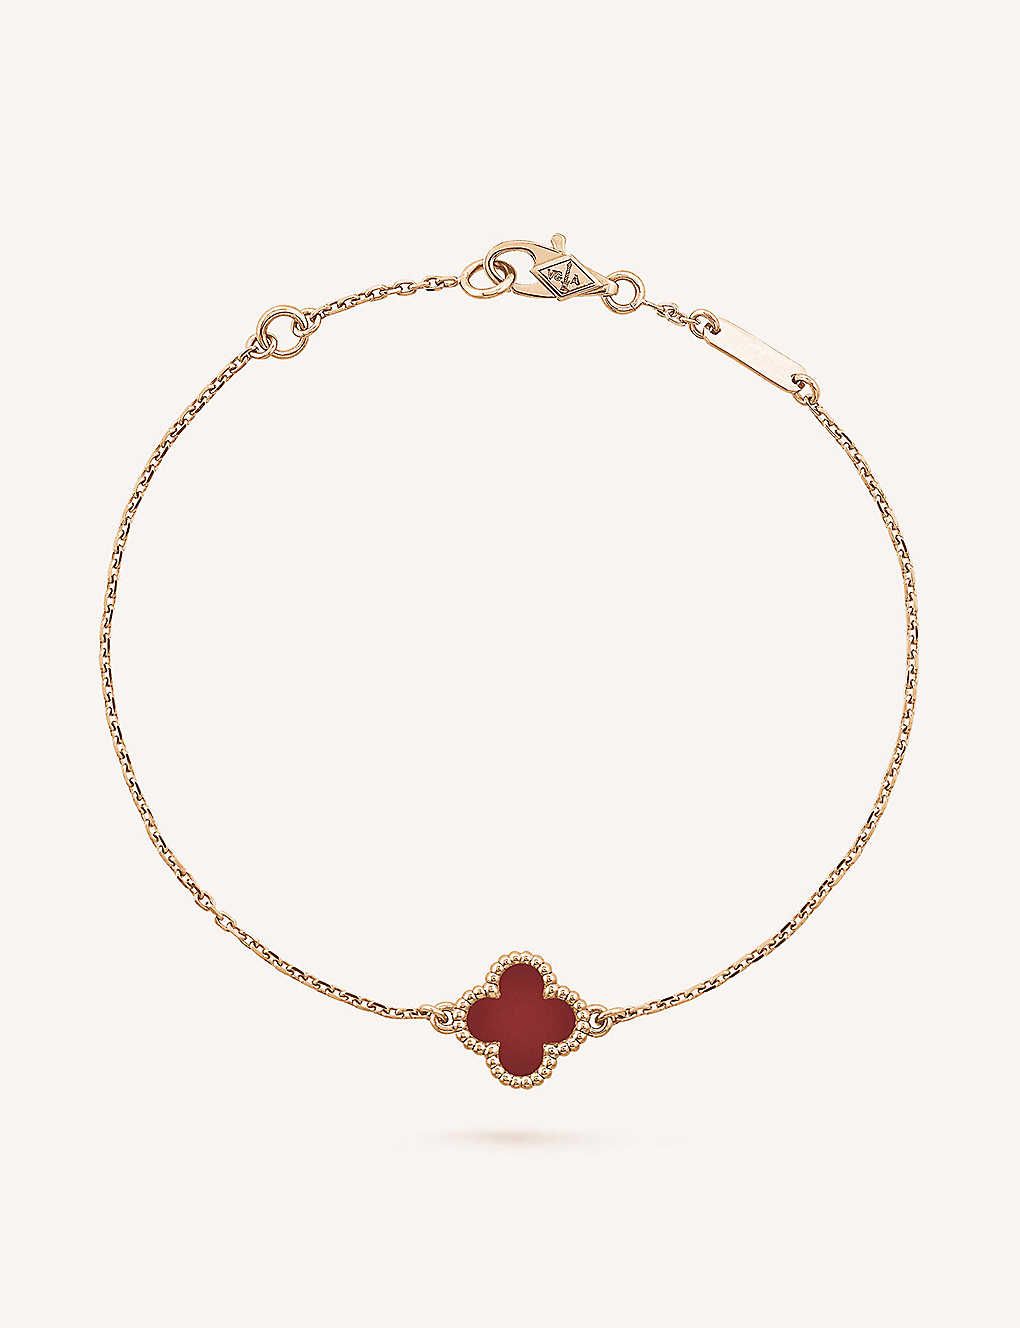 Sweet Alhambra rose-gold and carnelian bracelet | Selfridges